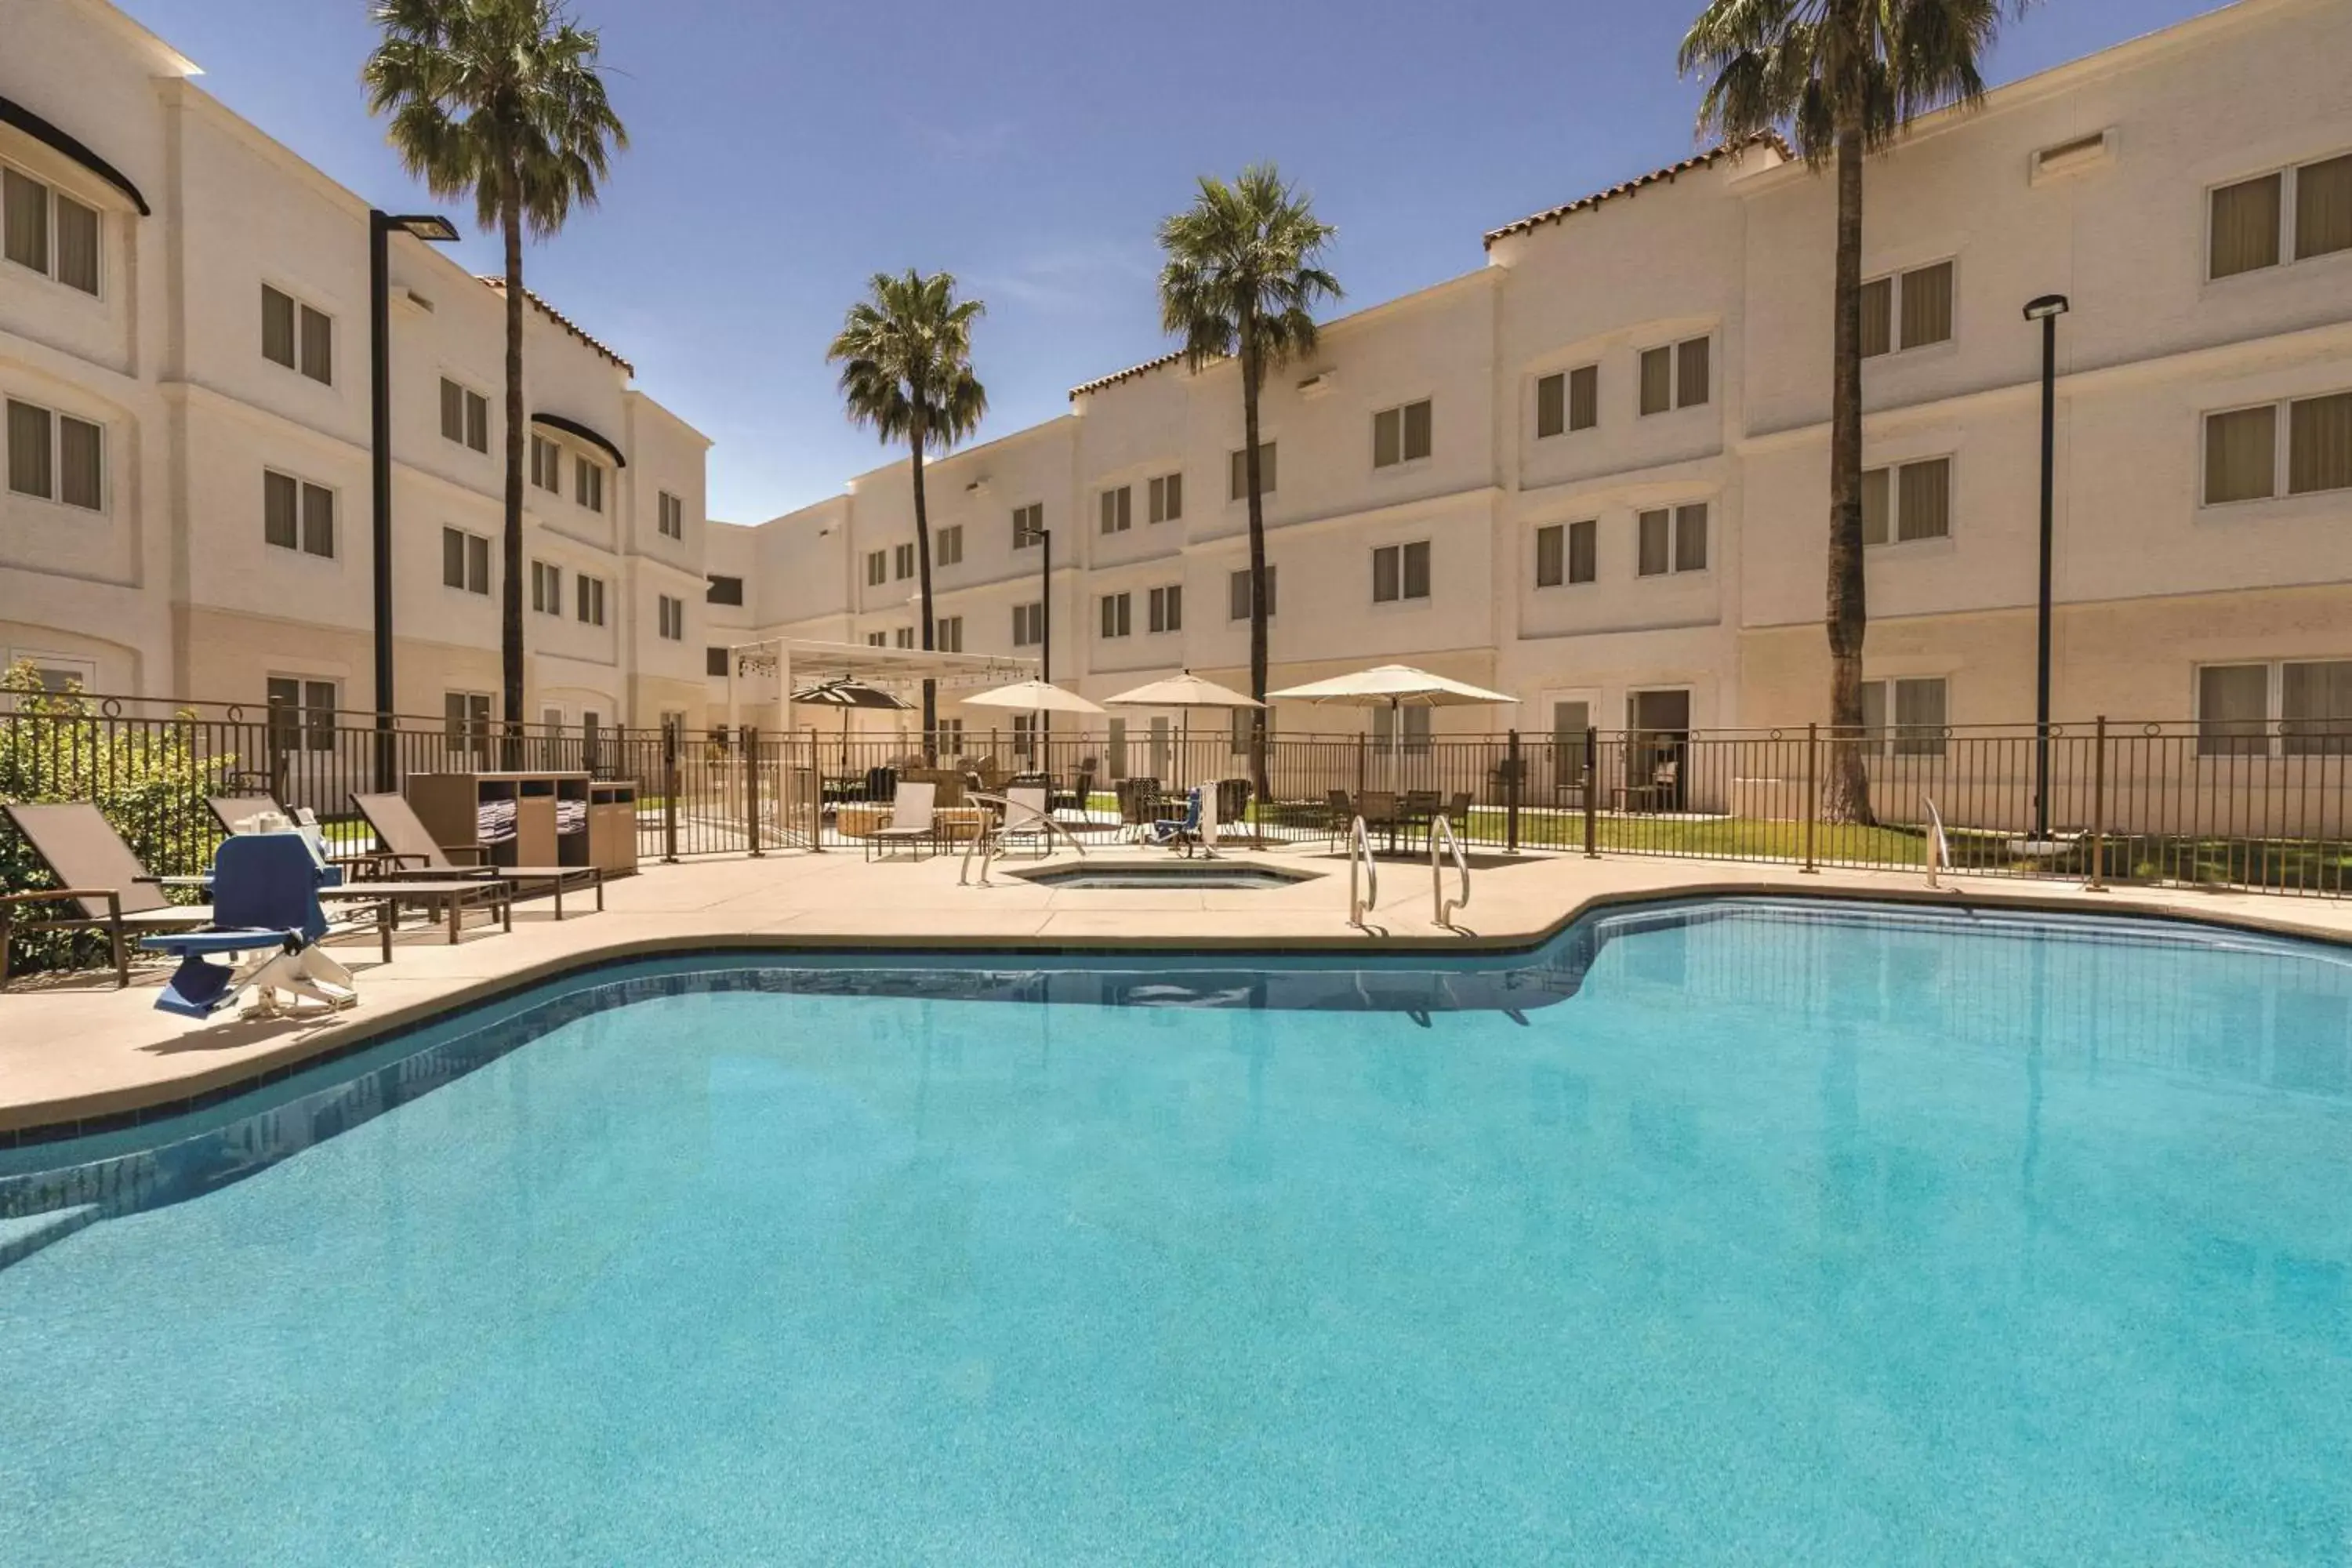 Swimming Pool in Homewood Suites Tucson St. Philip's Plaza University